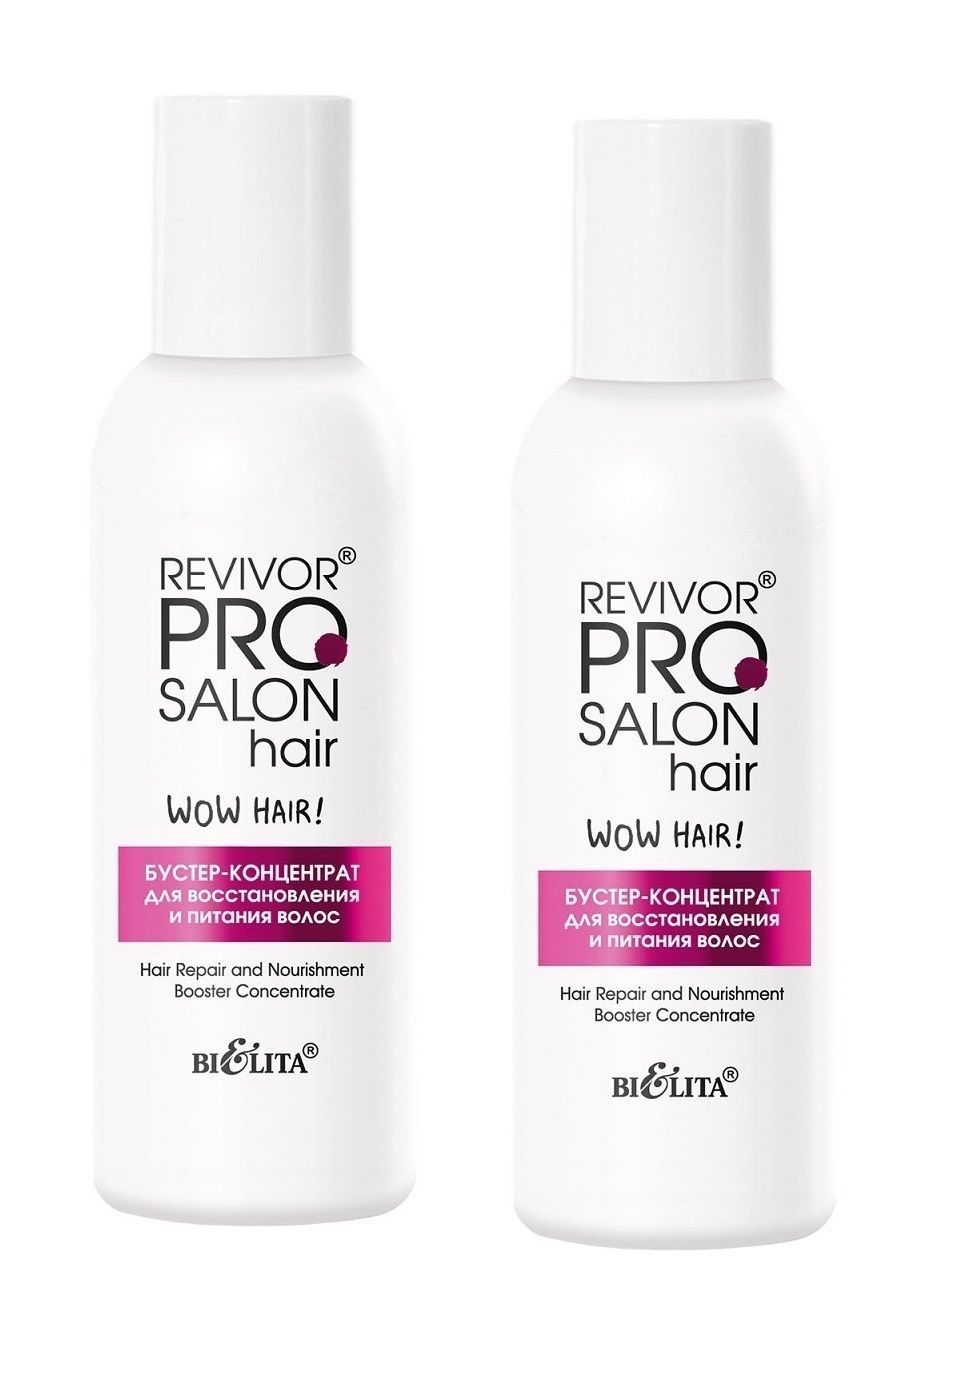 Revivor Pro Salon hair. Концентрат бустер для волос.